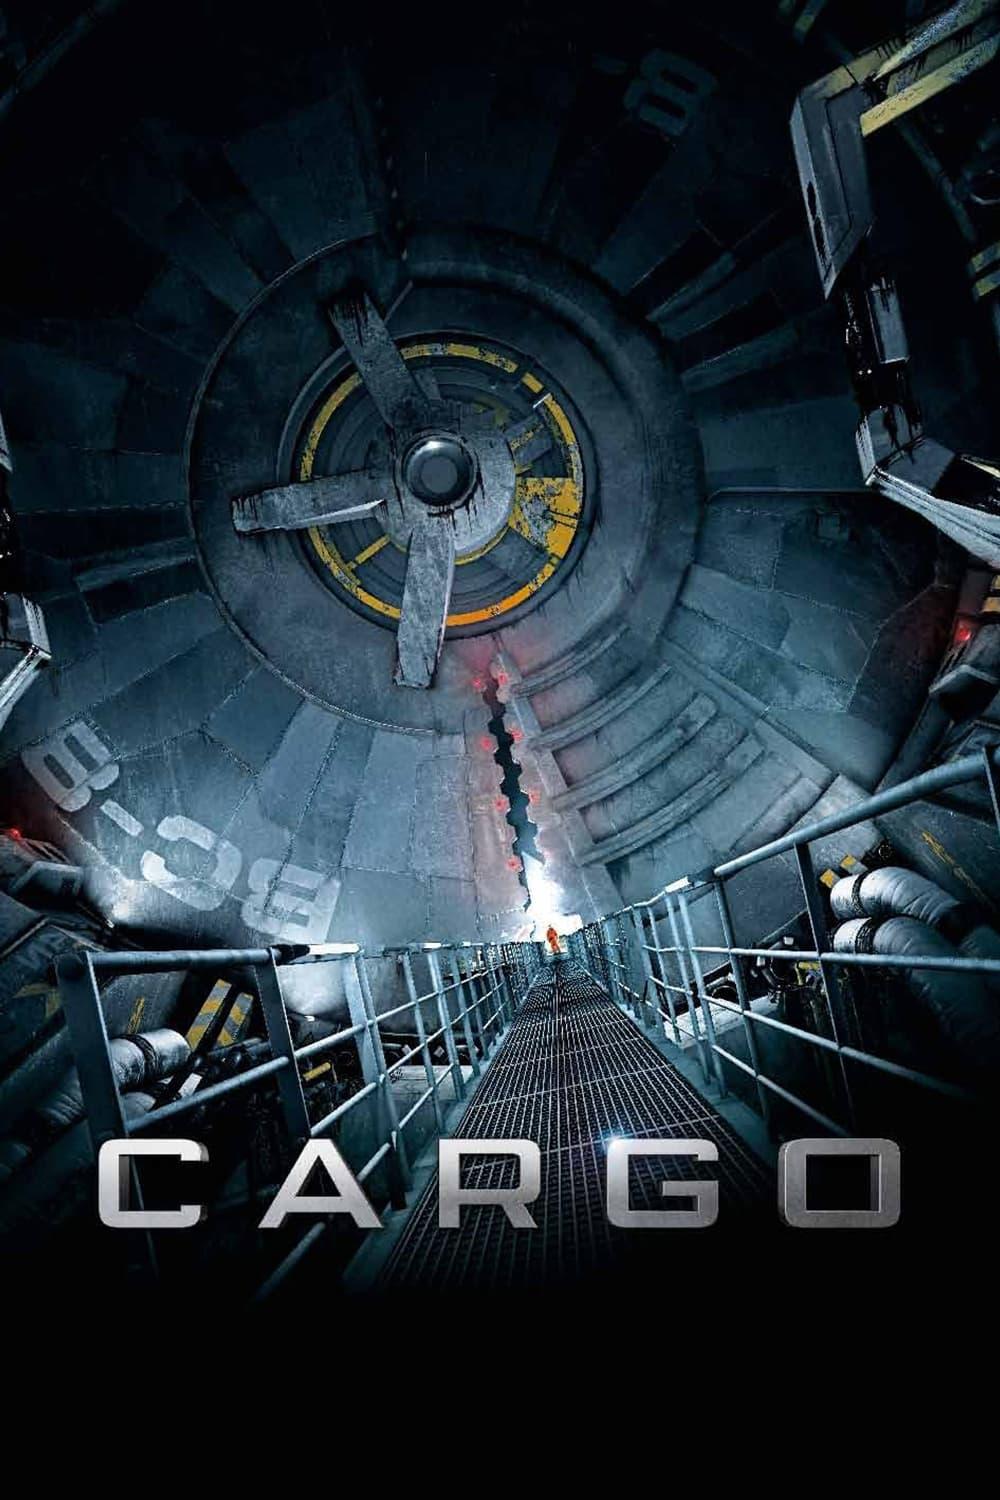 Cargo poster